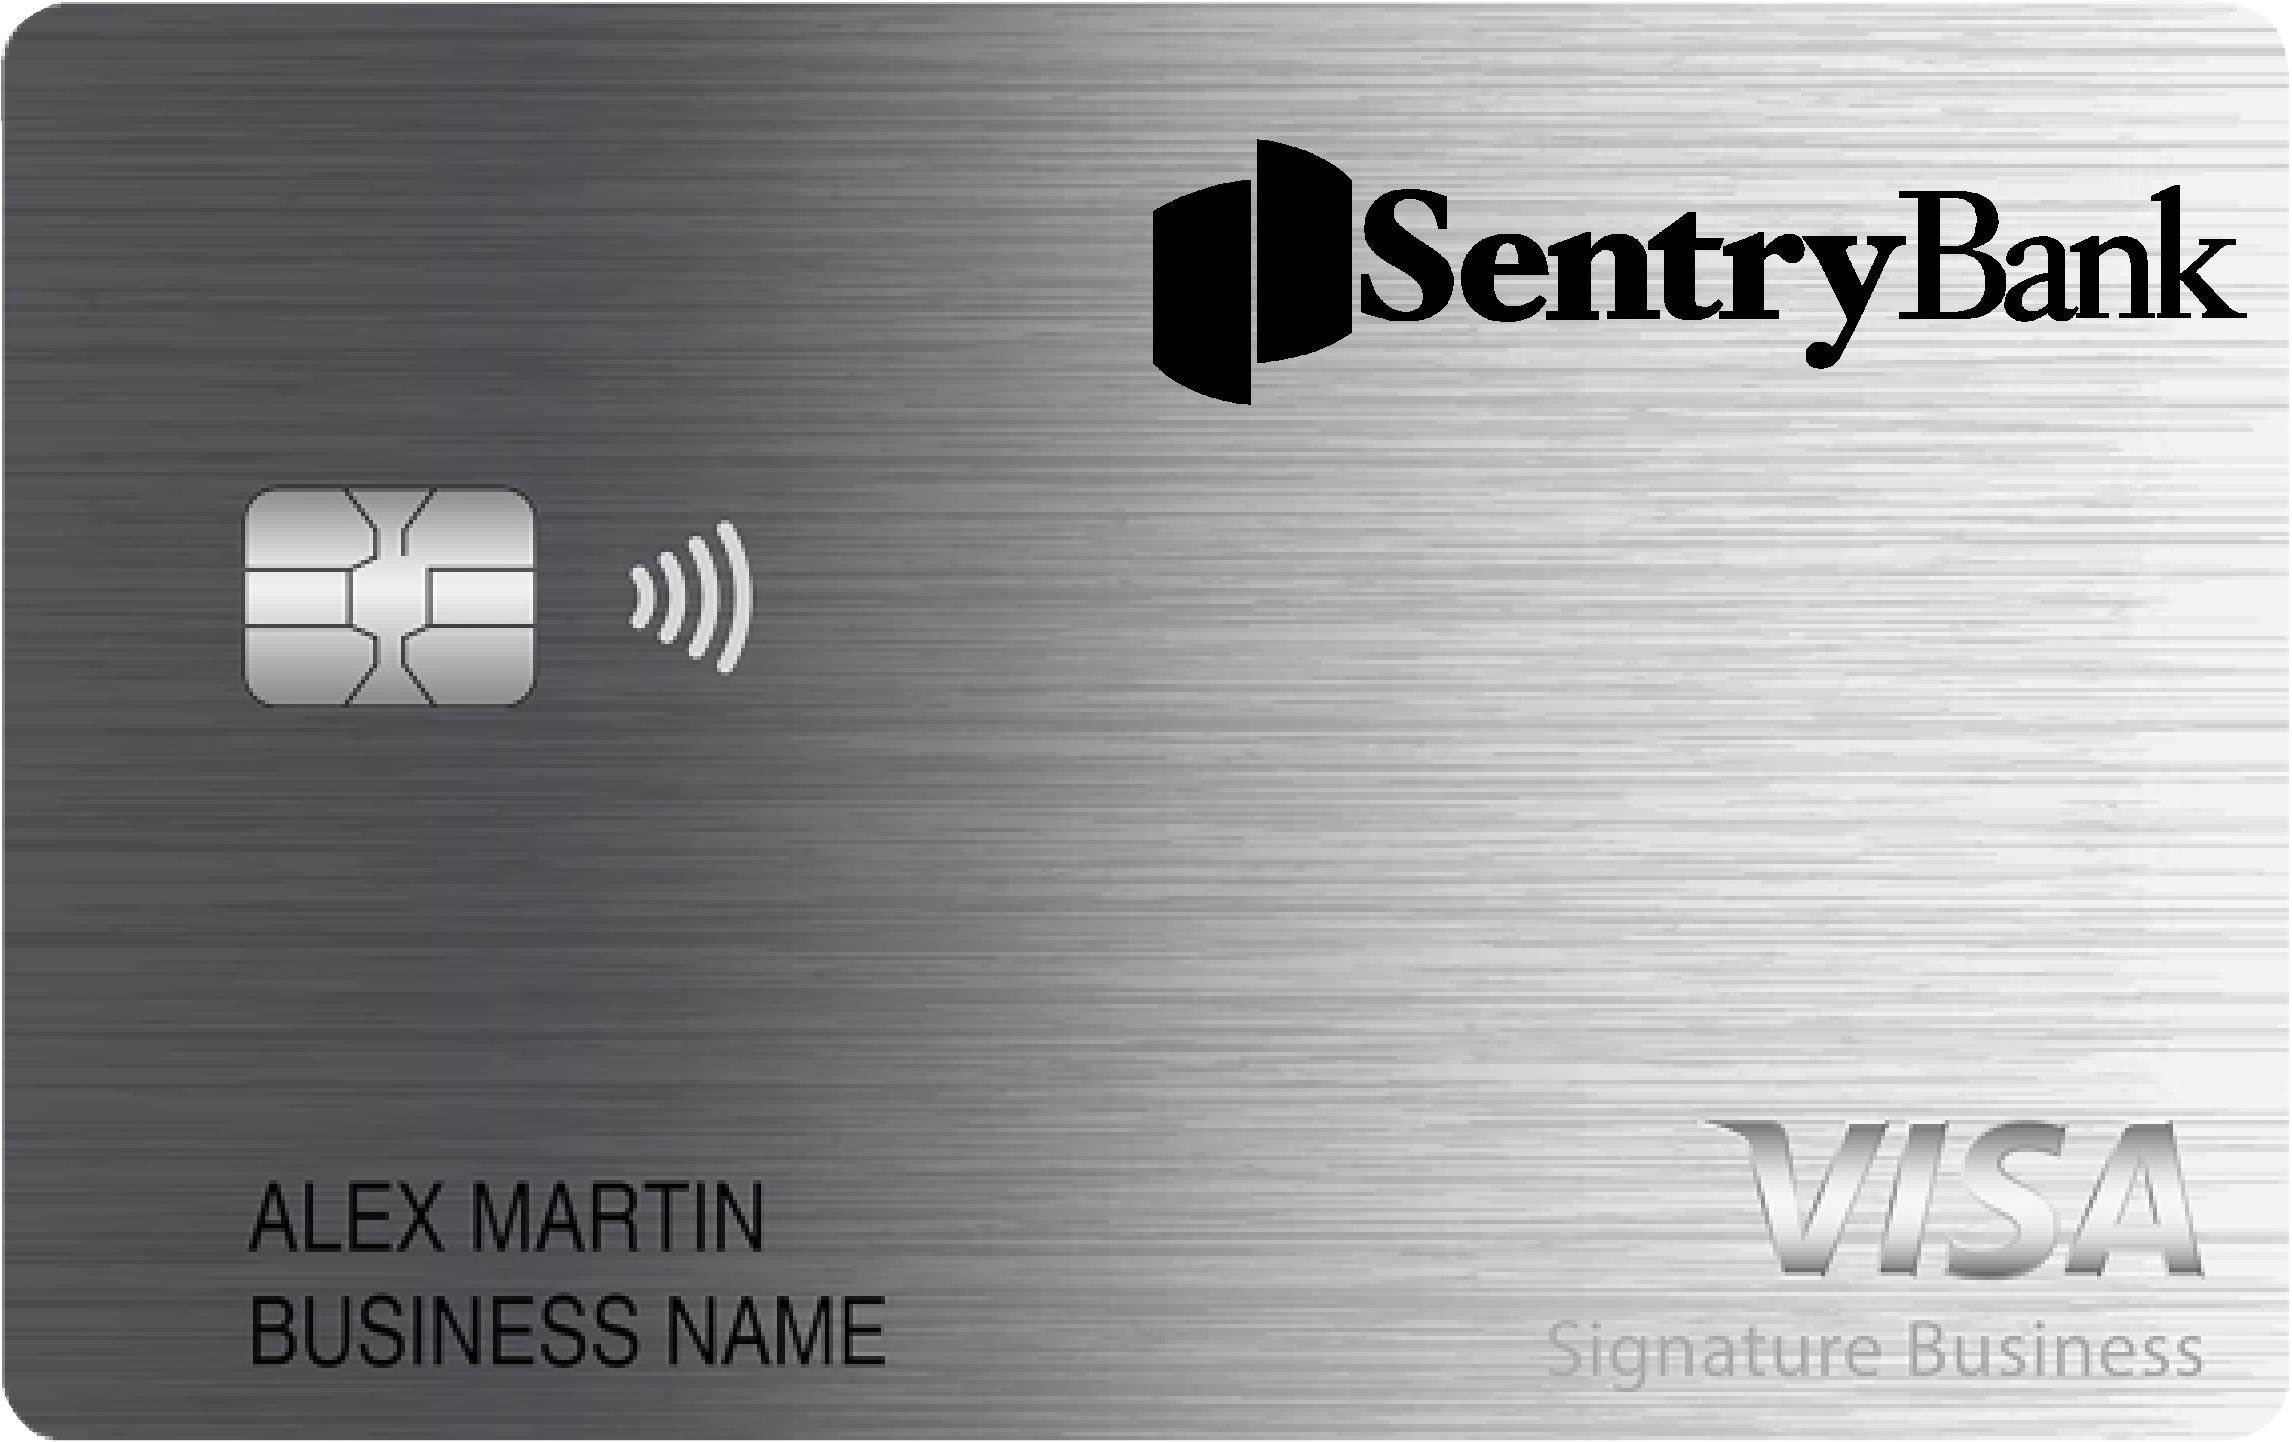 Sentry Bank Smart Business Rewards Card